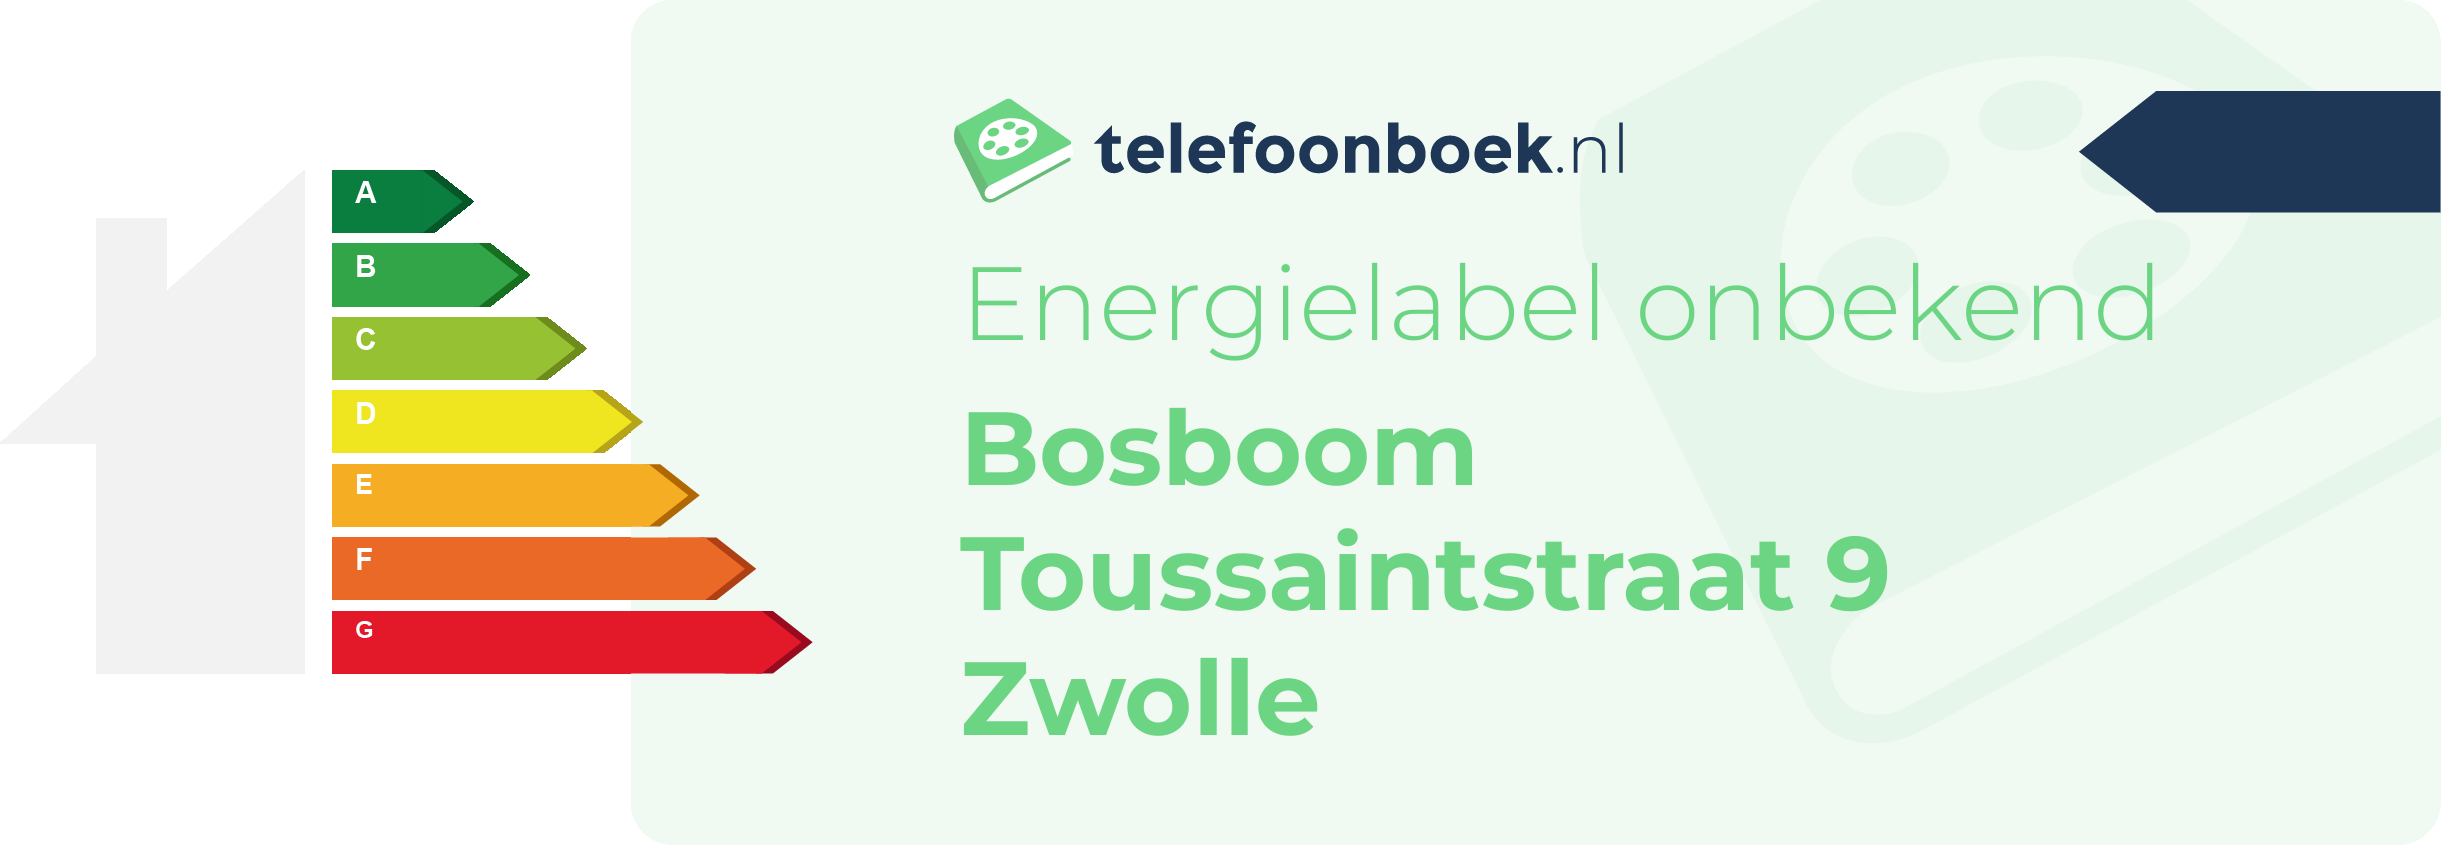 Energielabel Bosboom Toussaintstraat 9 Zwolle